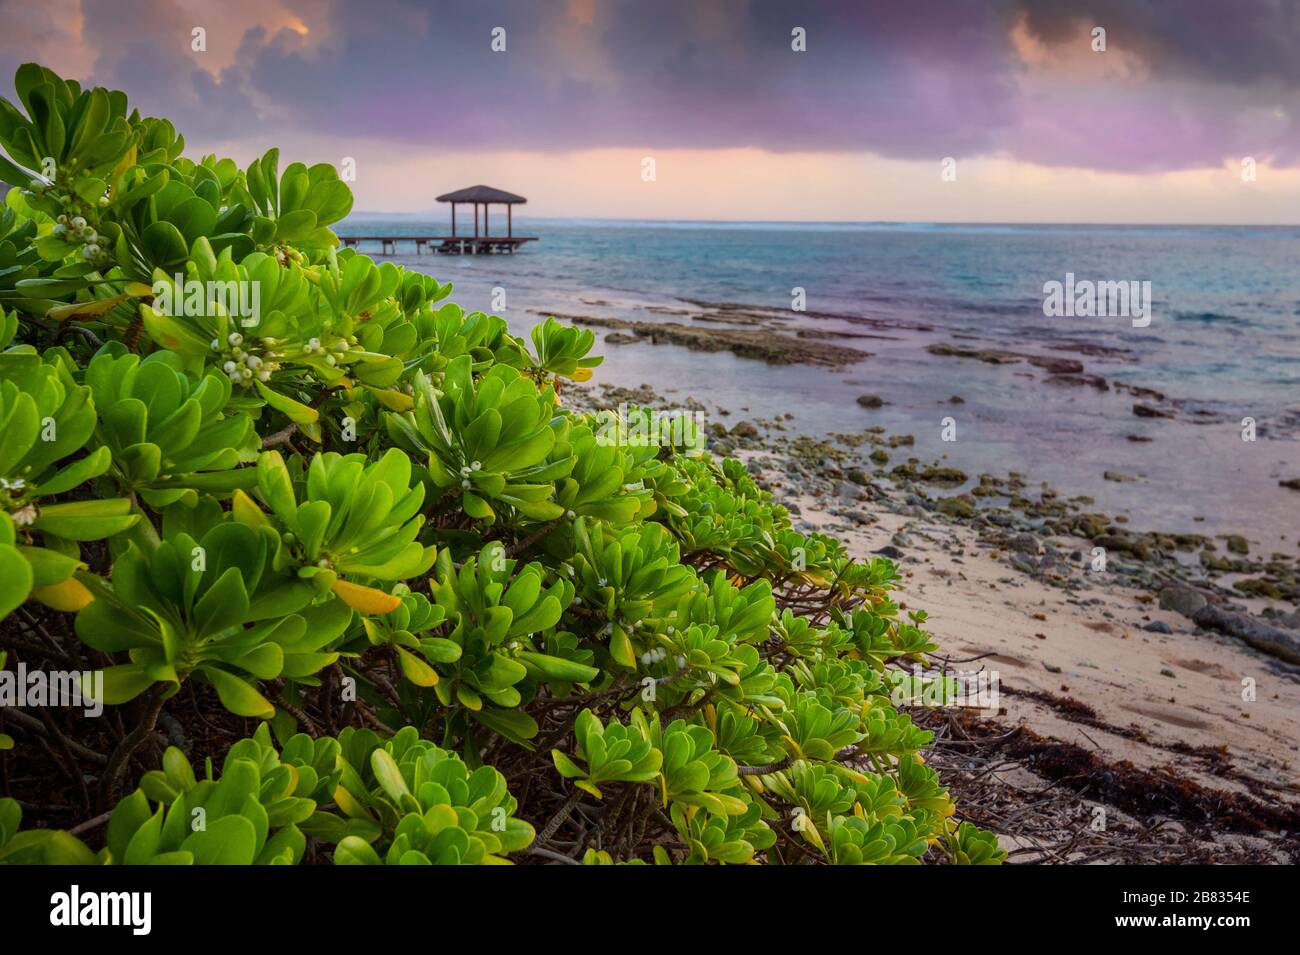 Green bush on beach at sunrise with hut, Grand Cayman Island Stock Photo